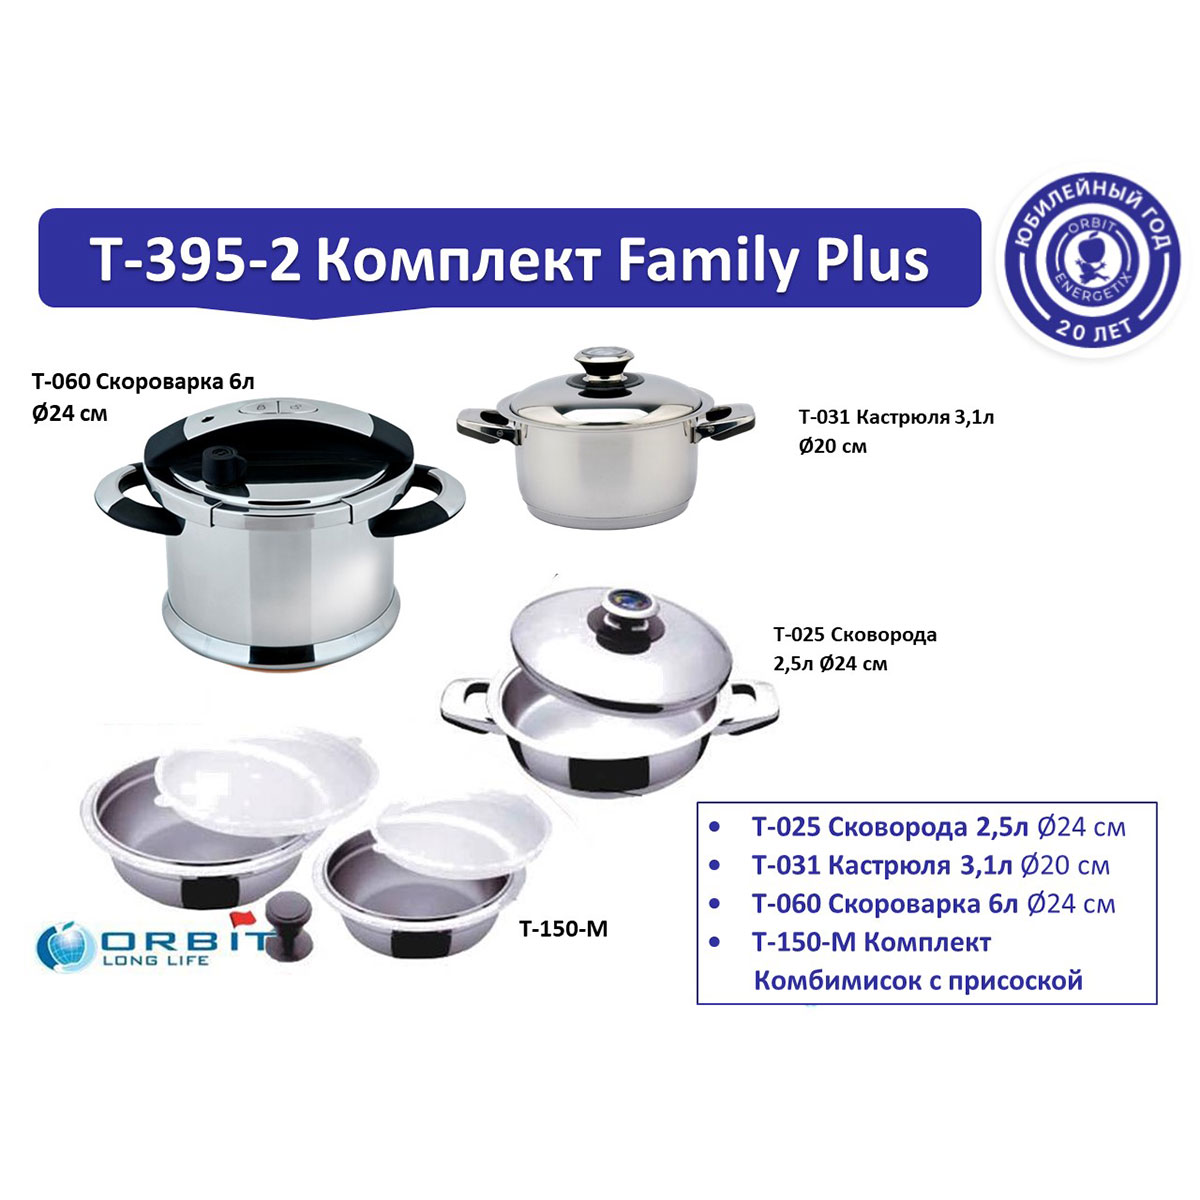 Комплект посуды T-395-2 Family Plus